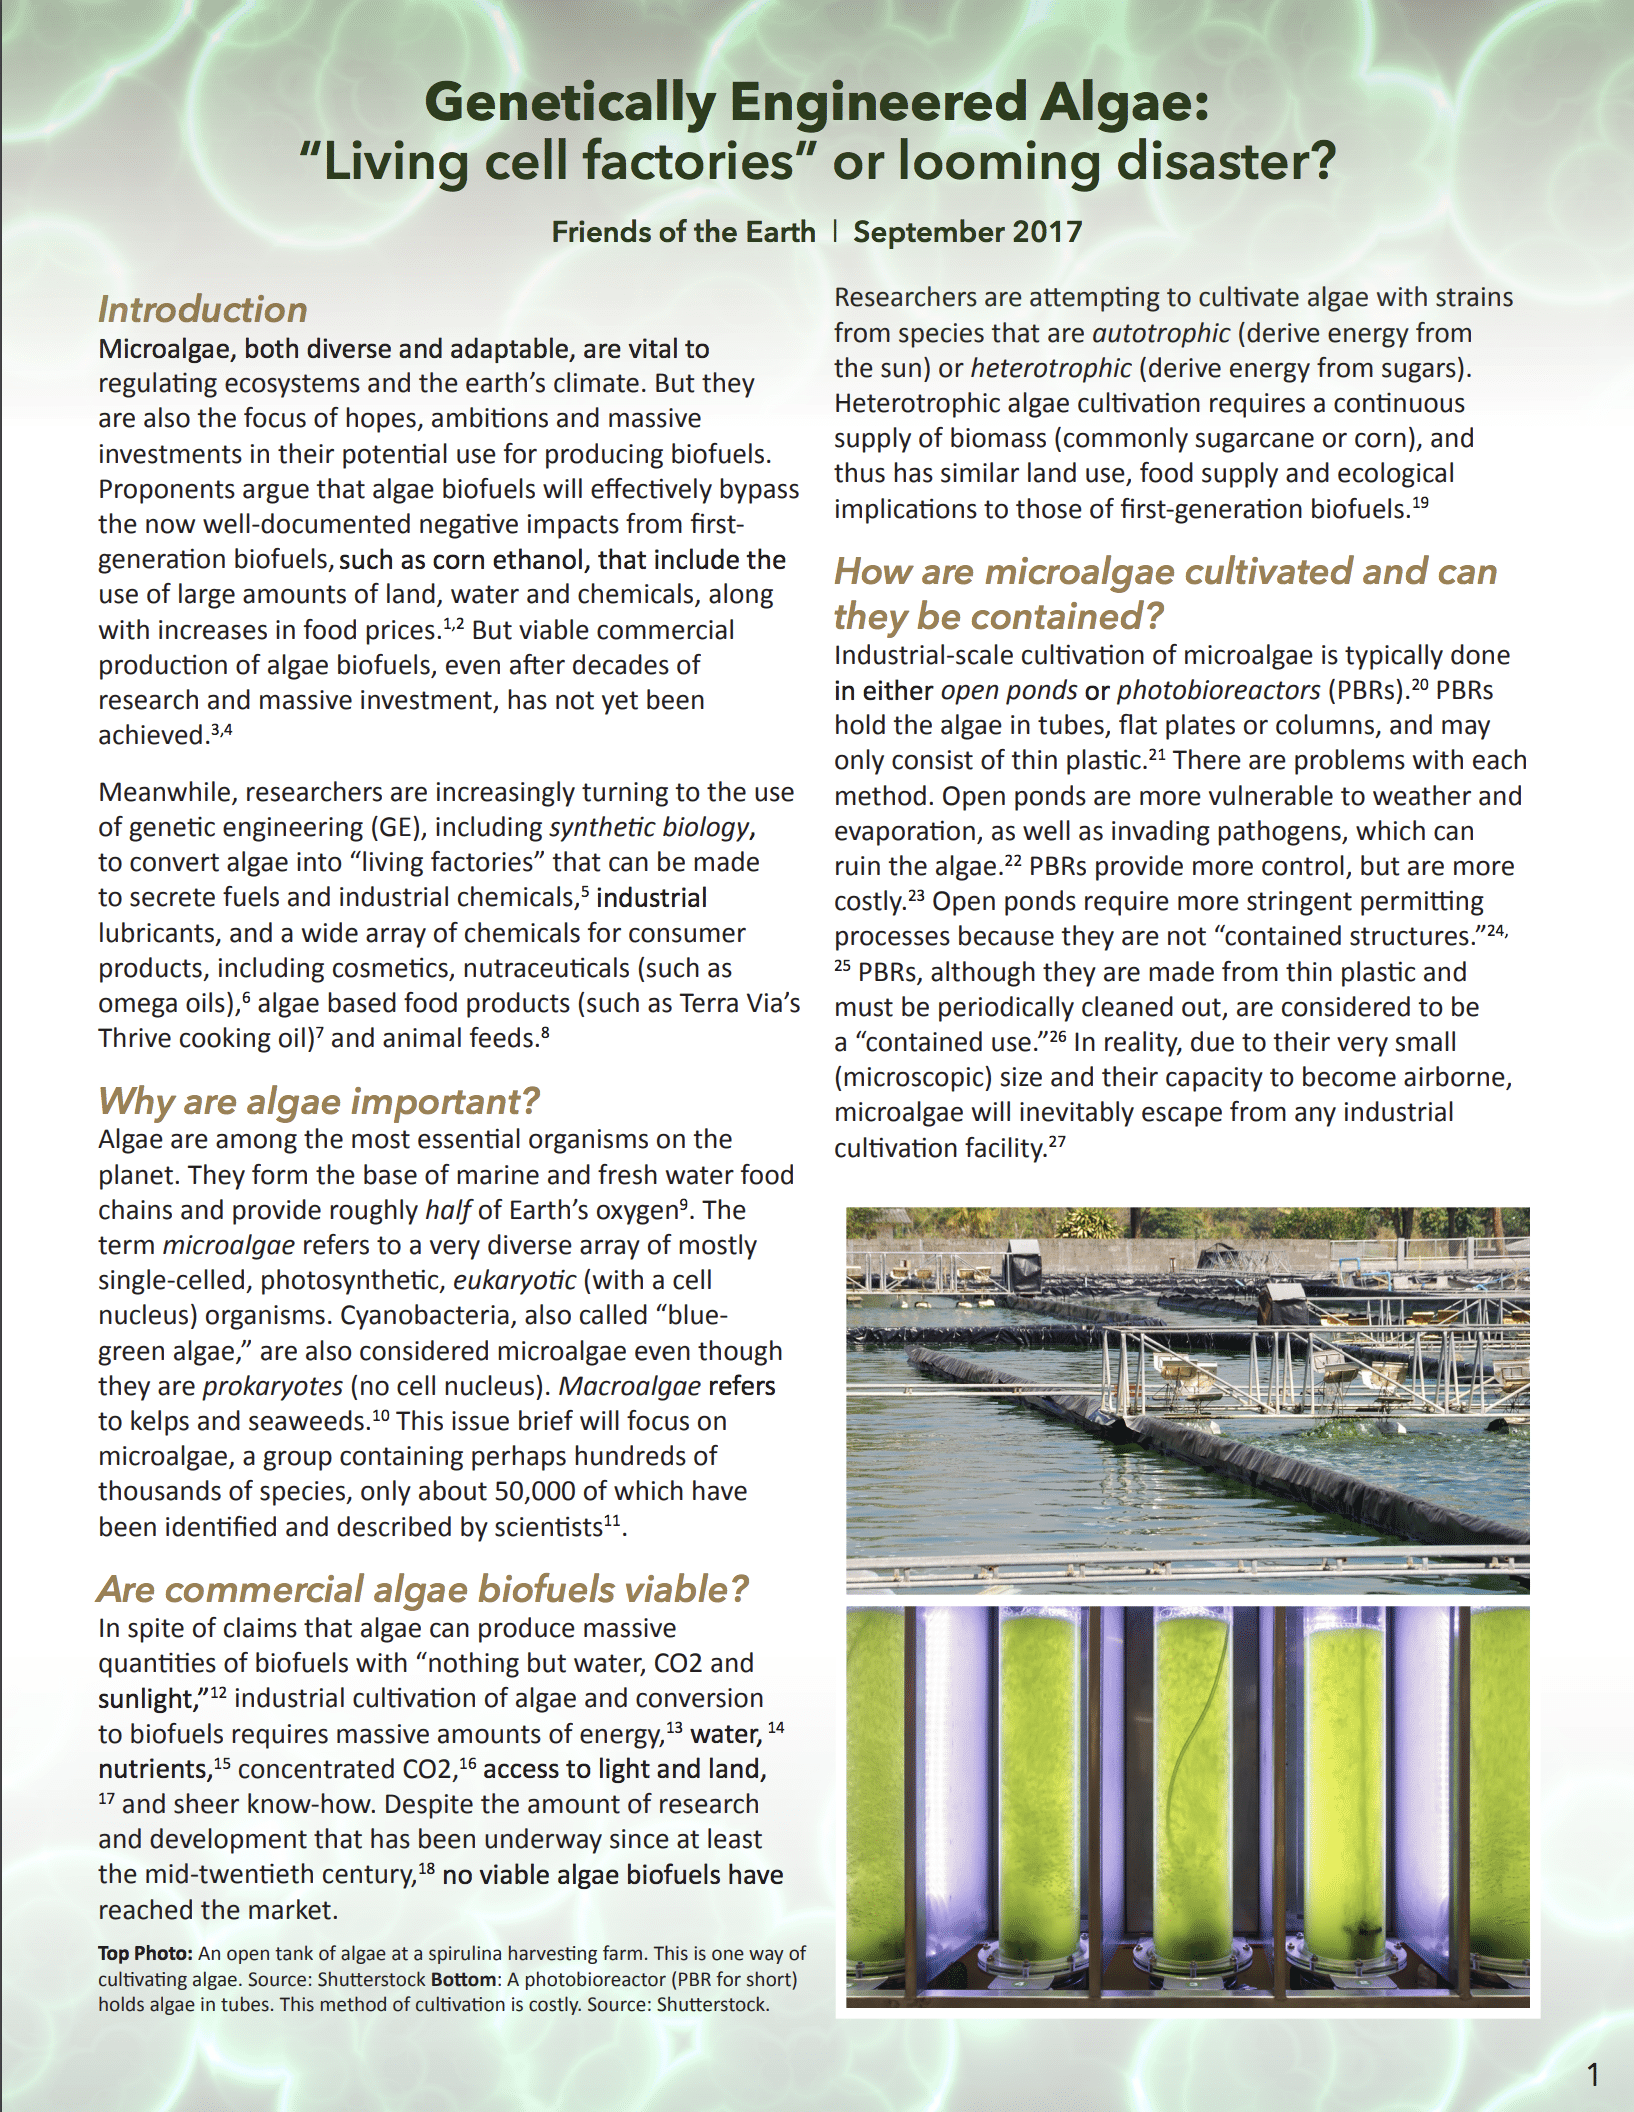 Synbio Algae Issue Brief